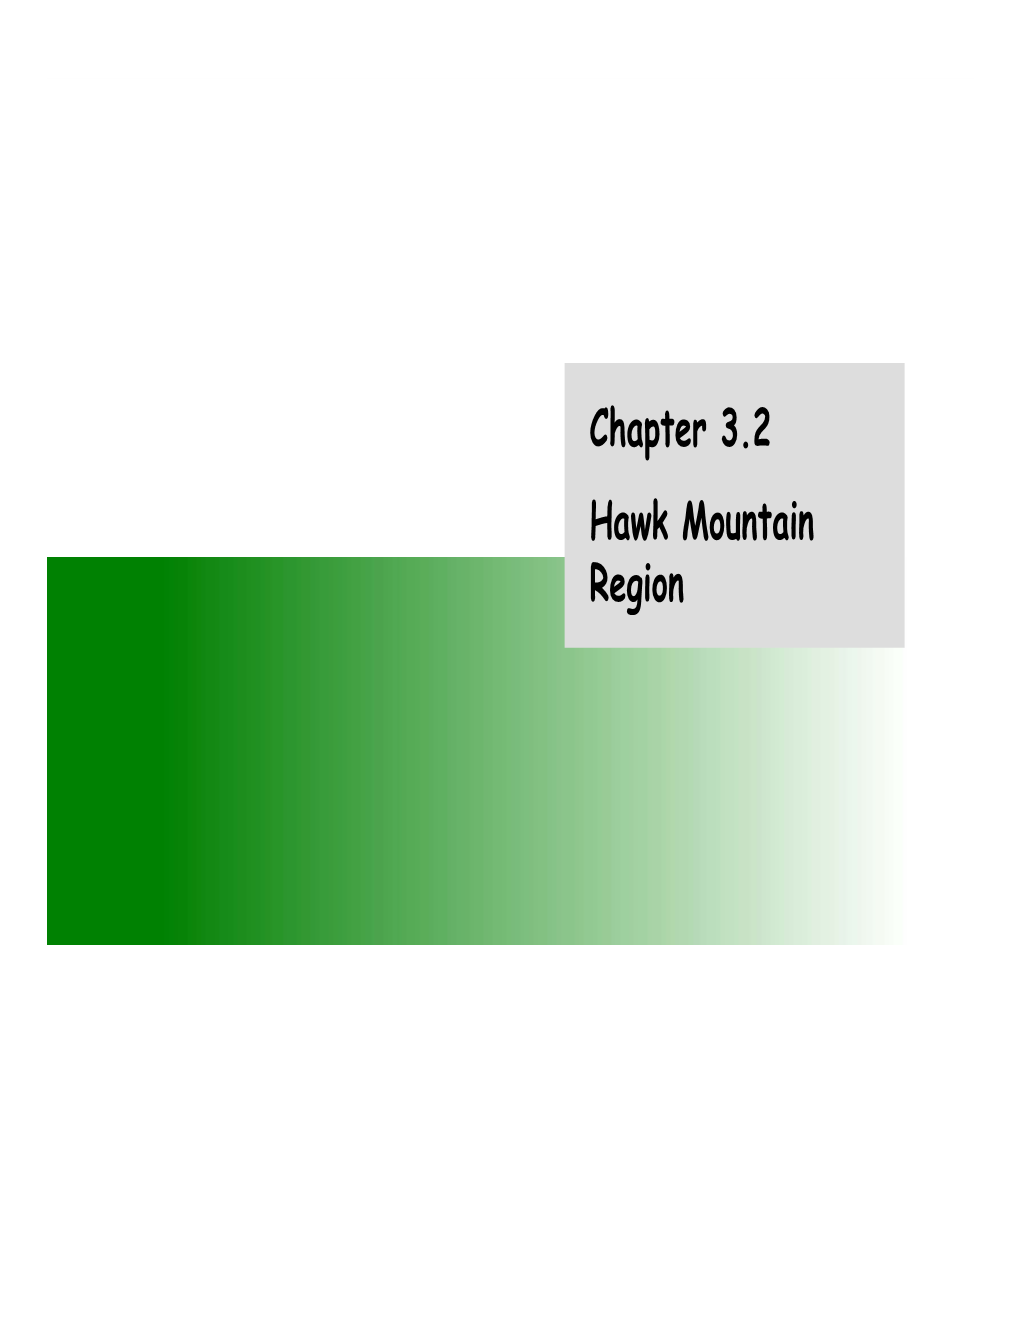 Berks County Greenway Plan – Hawk Mountain Region Assessment